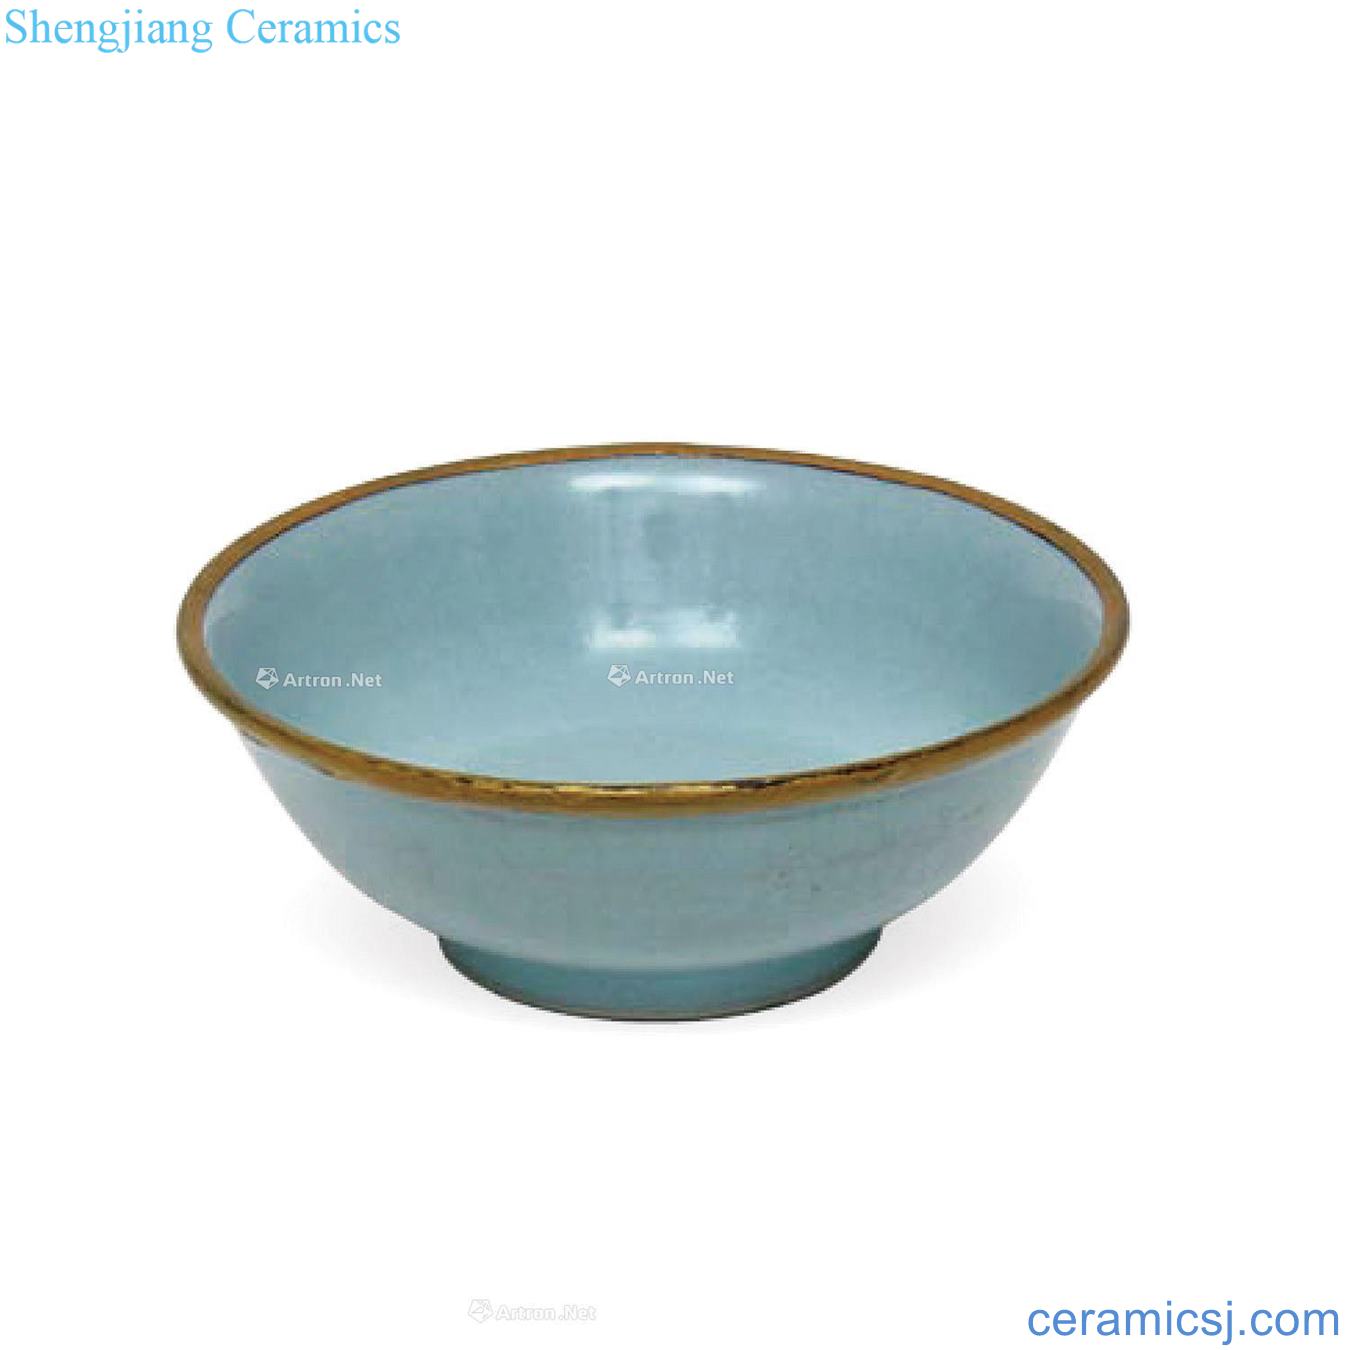 Your porcelain azure glaze rabbet bowl